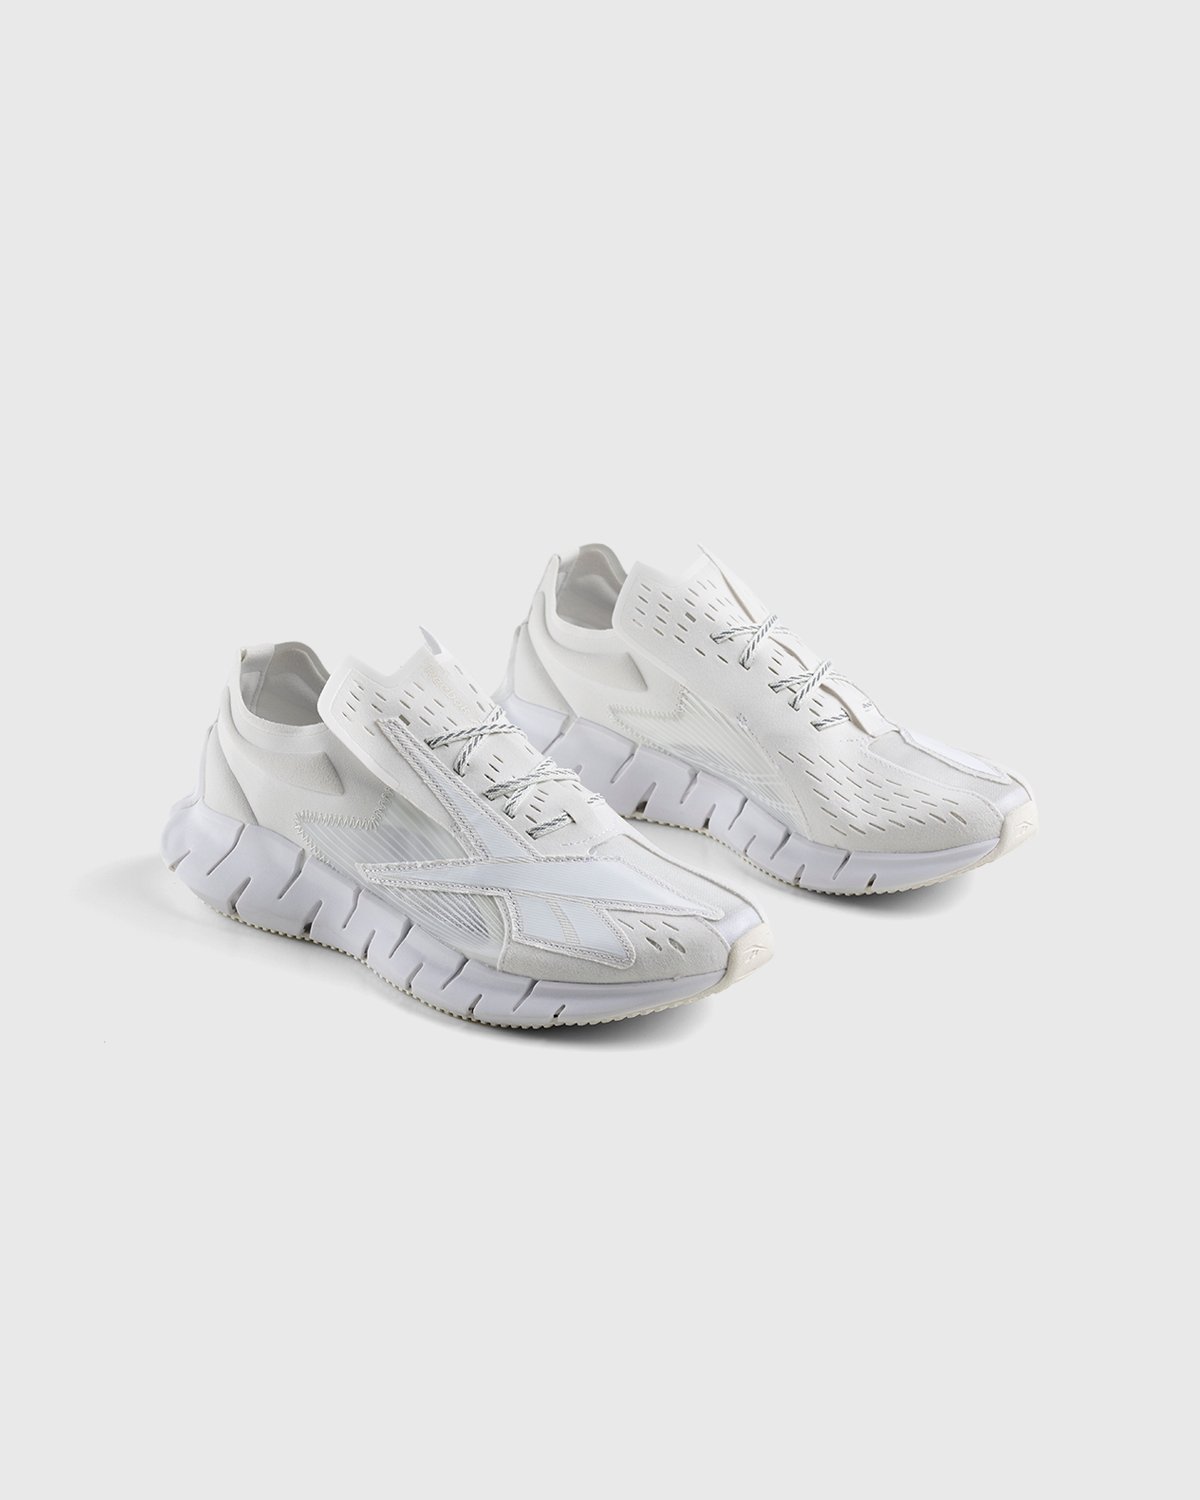 Reebok x Maison Margiela - Zig 3D Storm Memory Of White - Footwear - White - Image 3